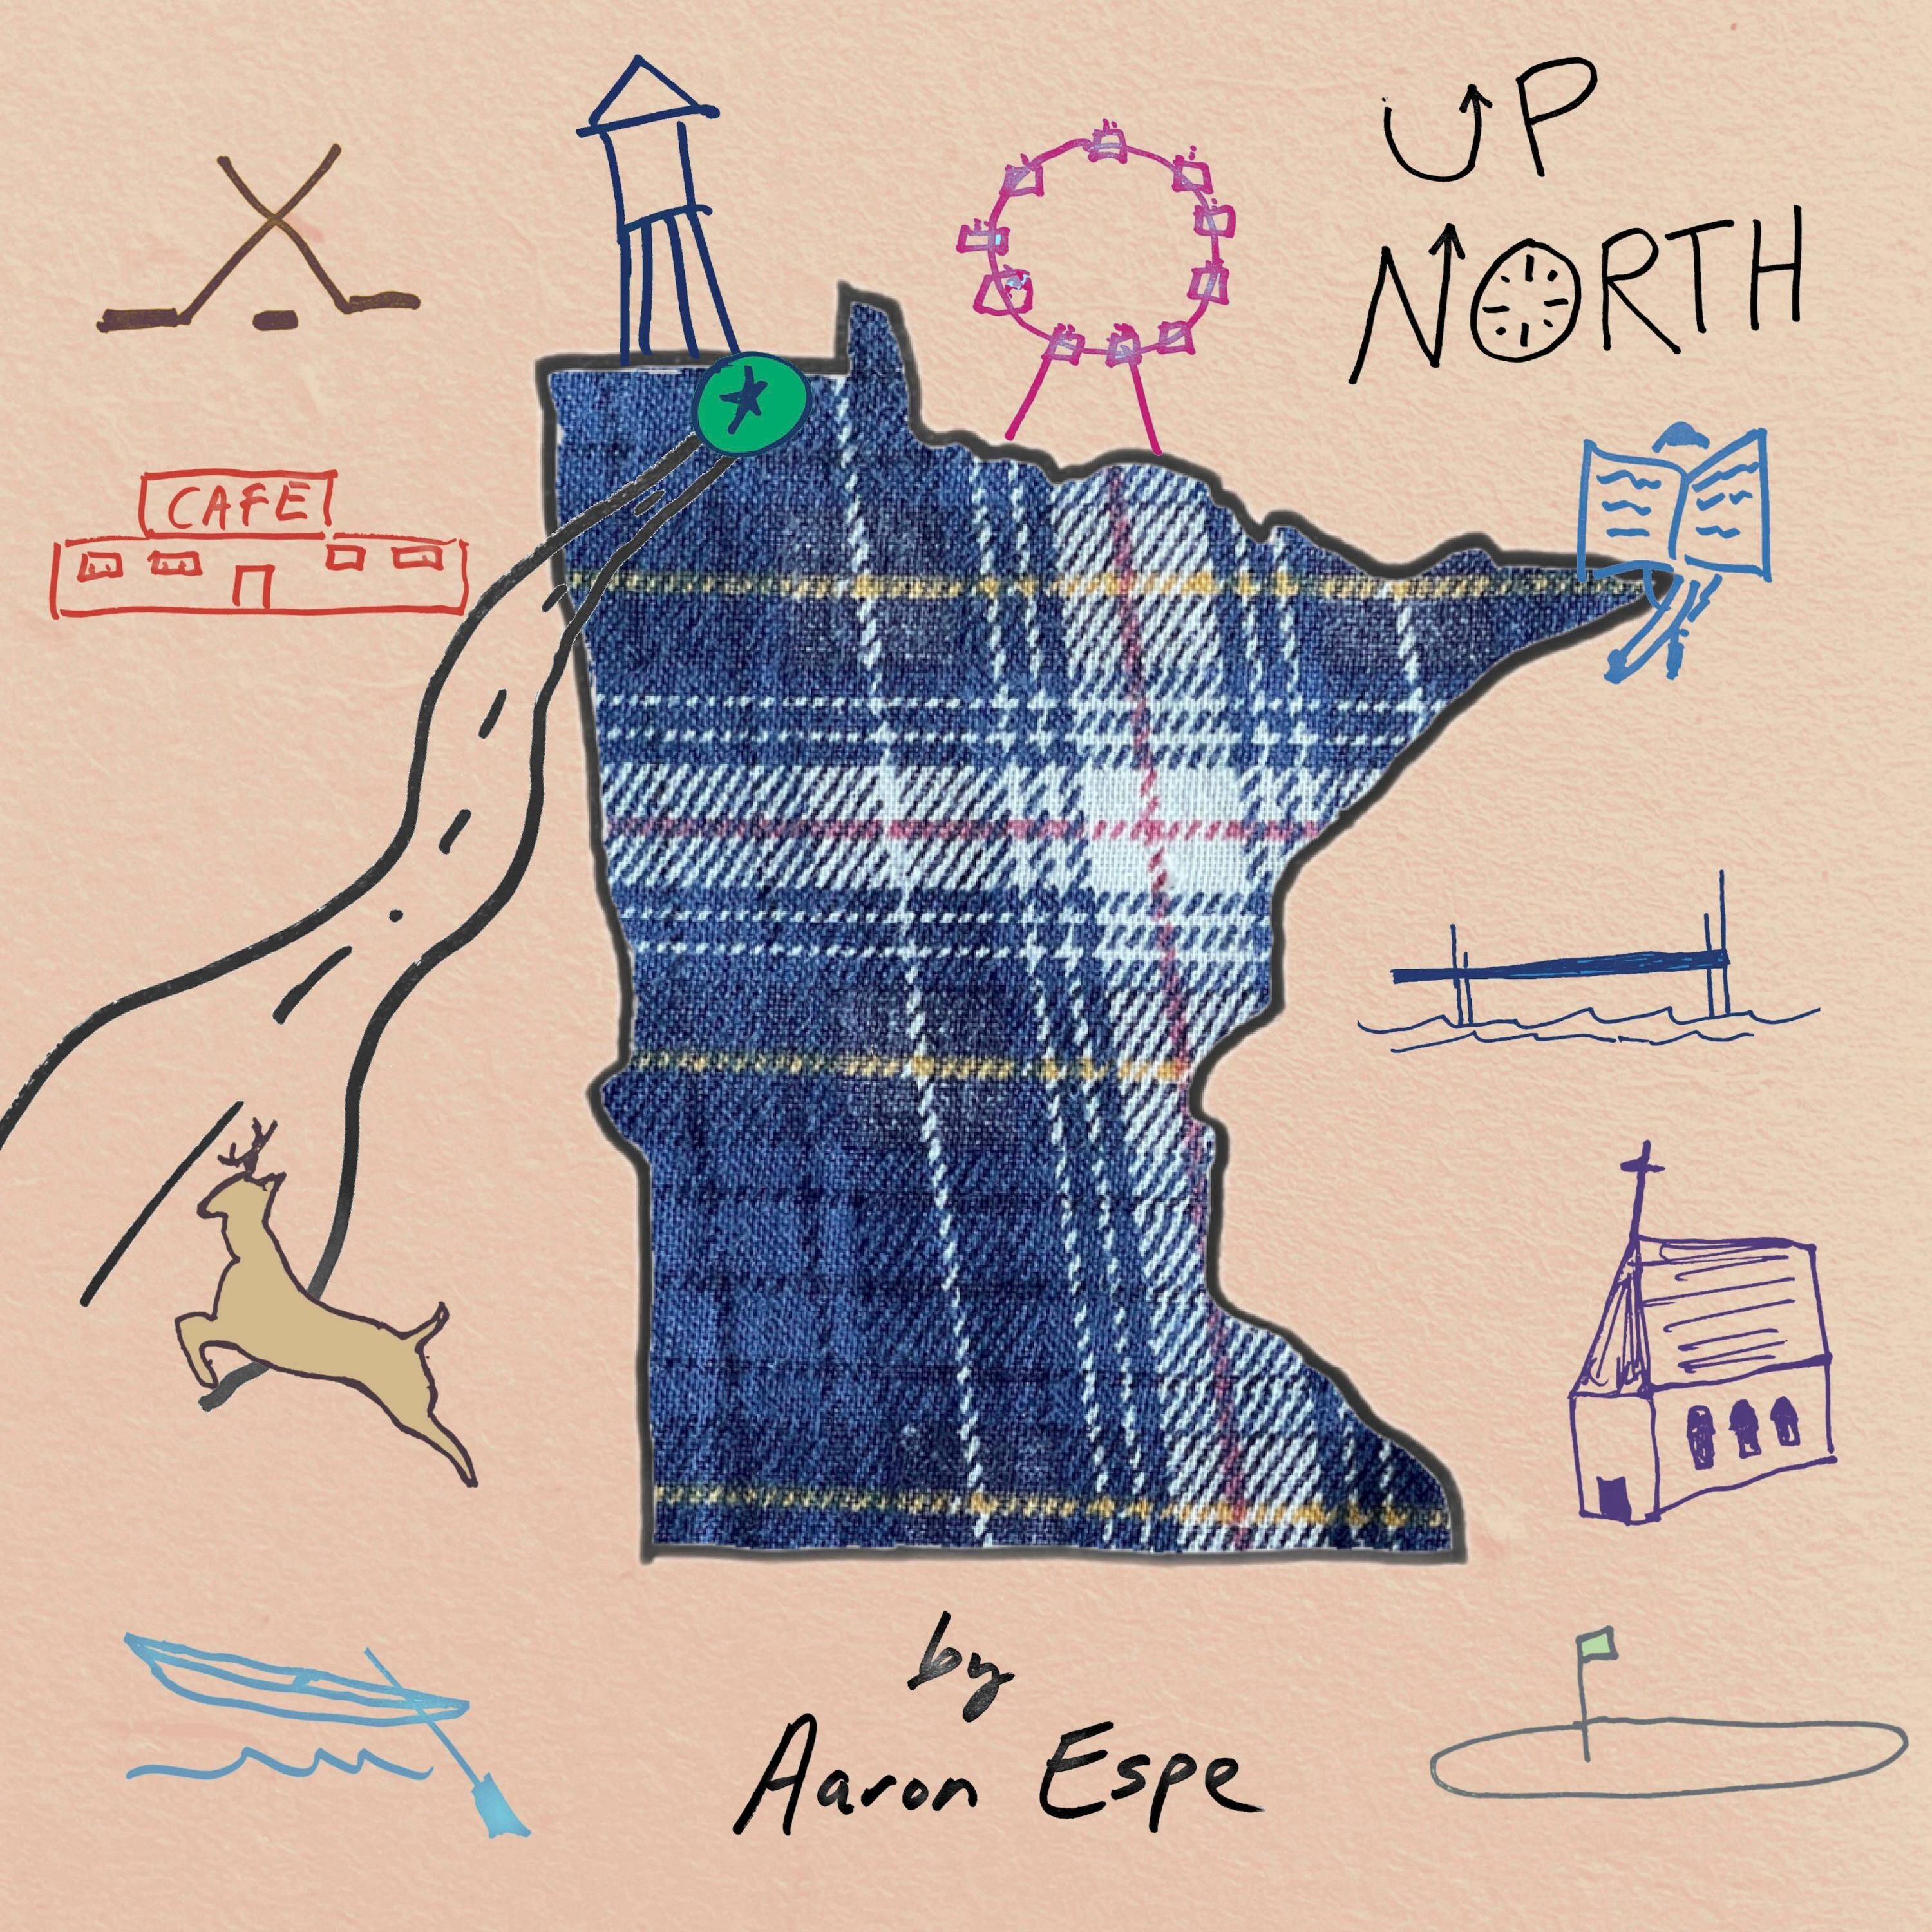 Aaron Espe - 2022 - Up North (24-44.1)